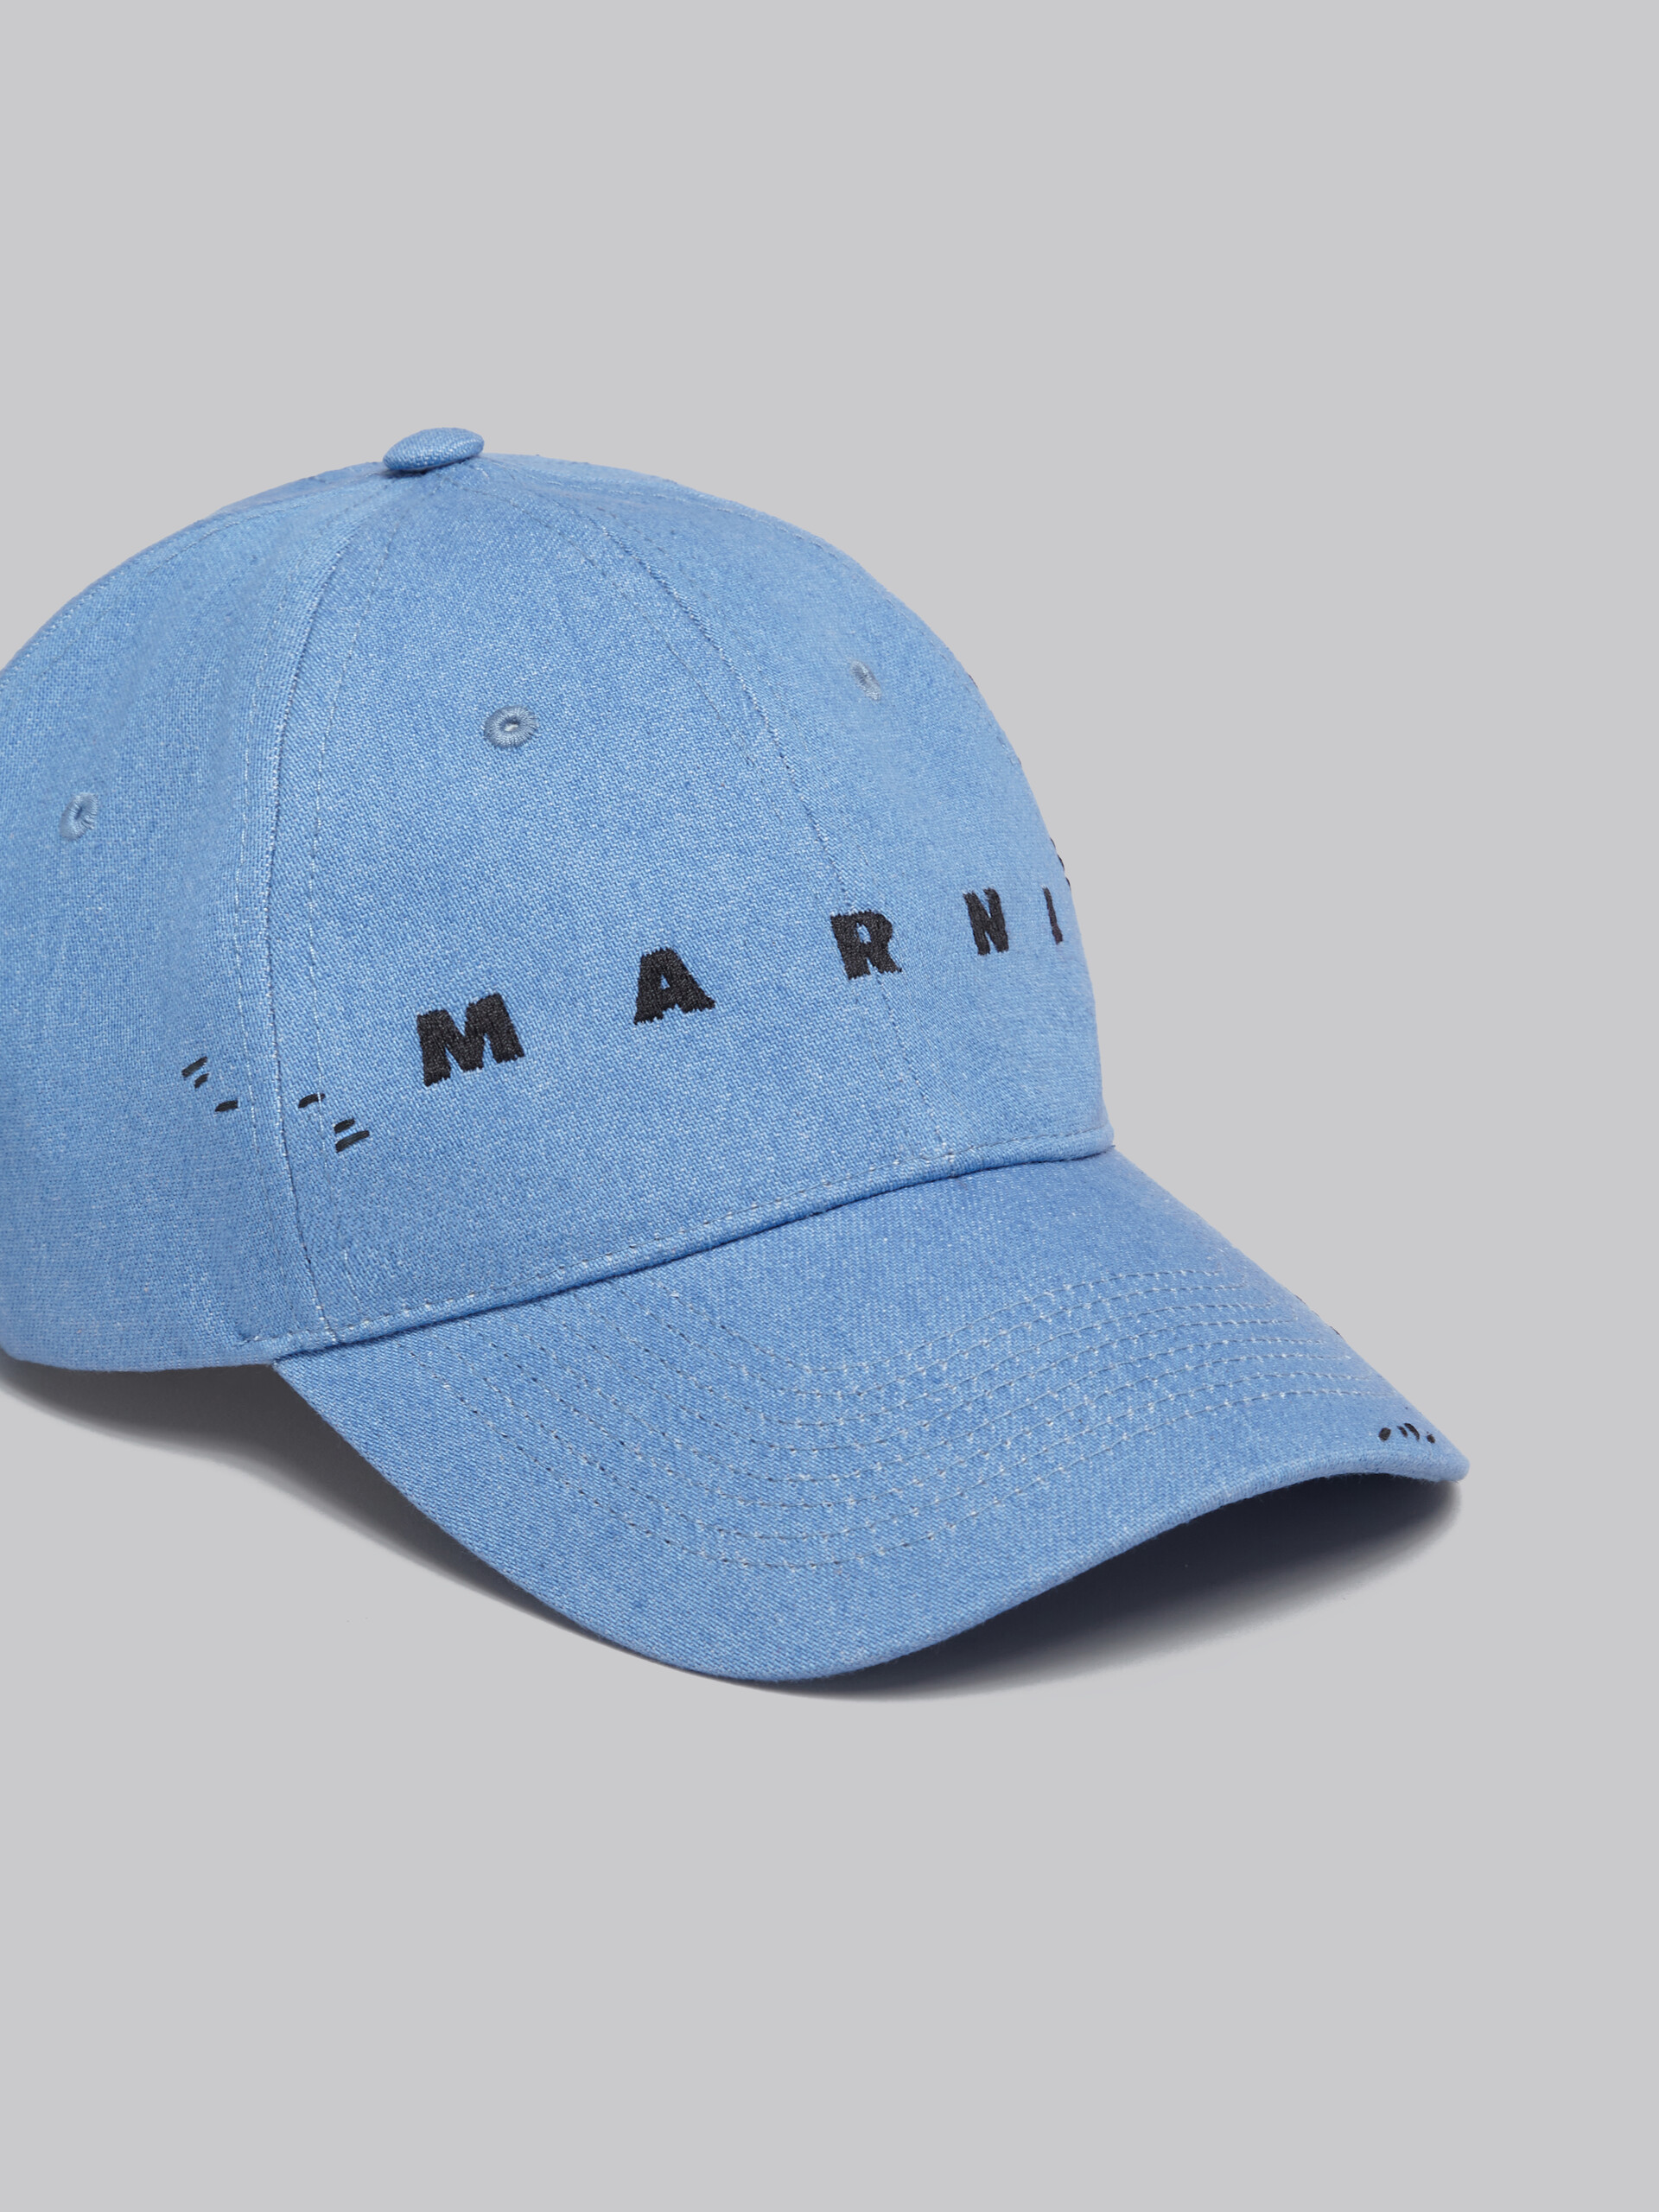 Gorra azul de denim con remiendo Marni - Sombrero - Image 4